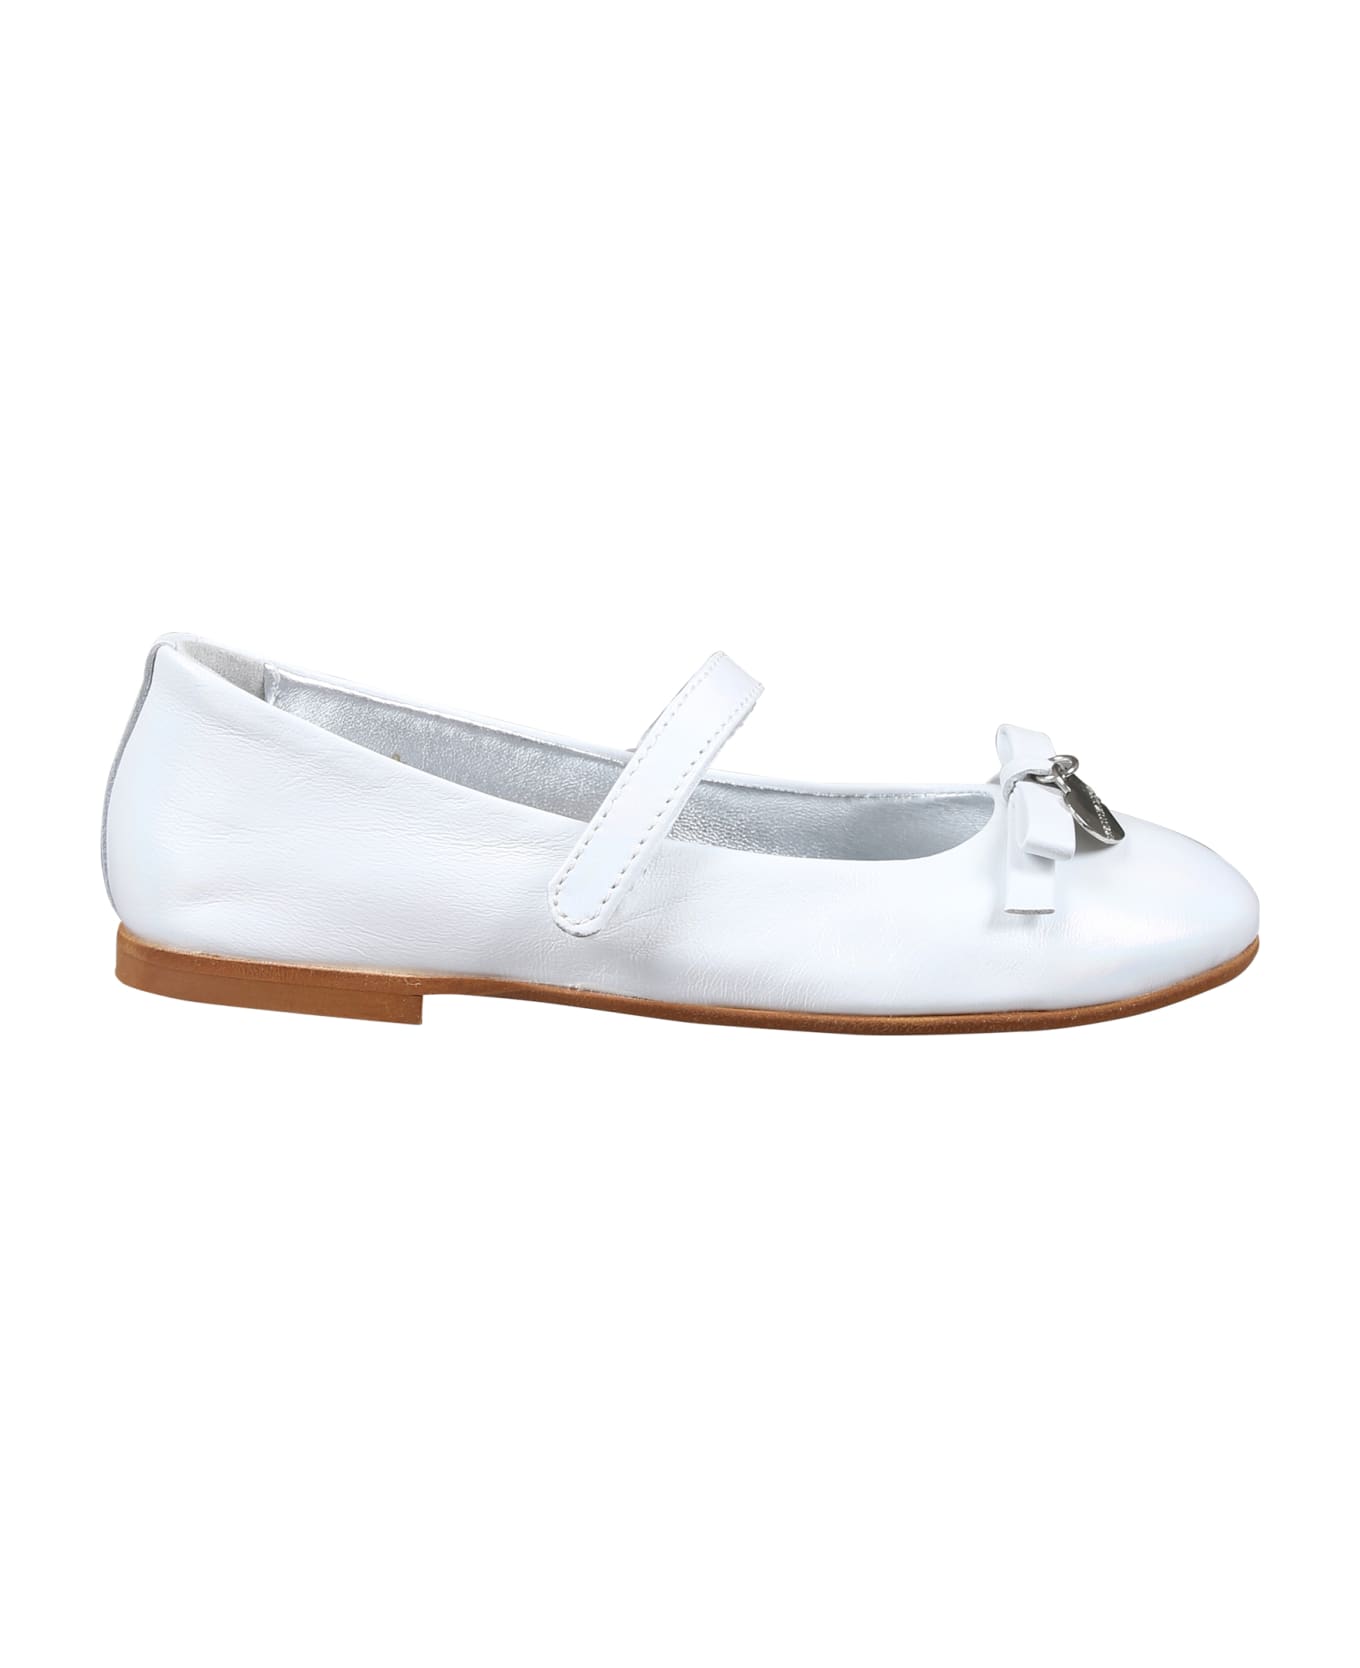 Monnalisa White Ballet Flat For Girl With Bow - White